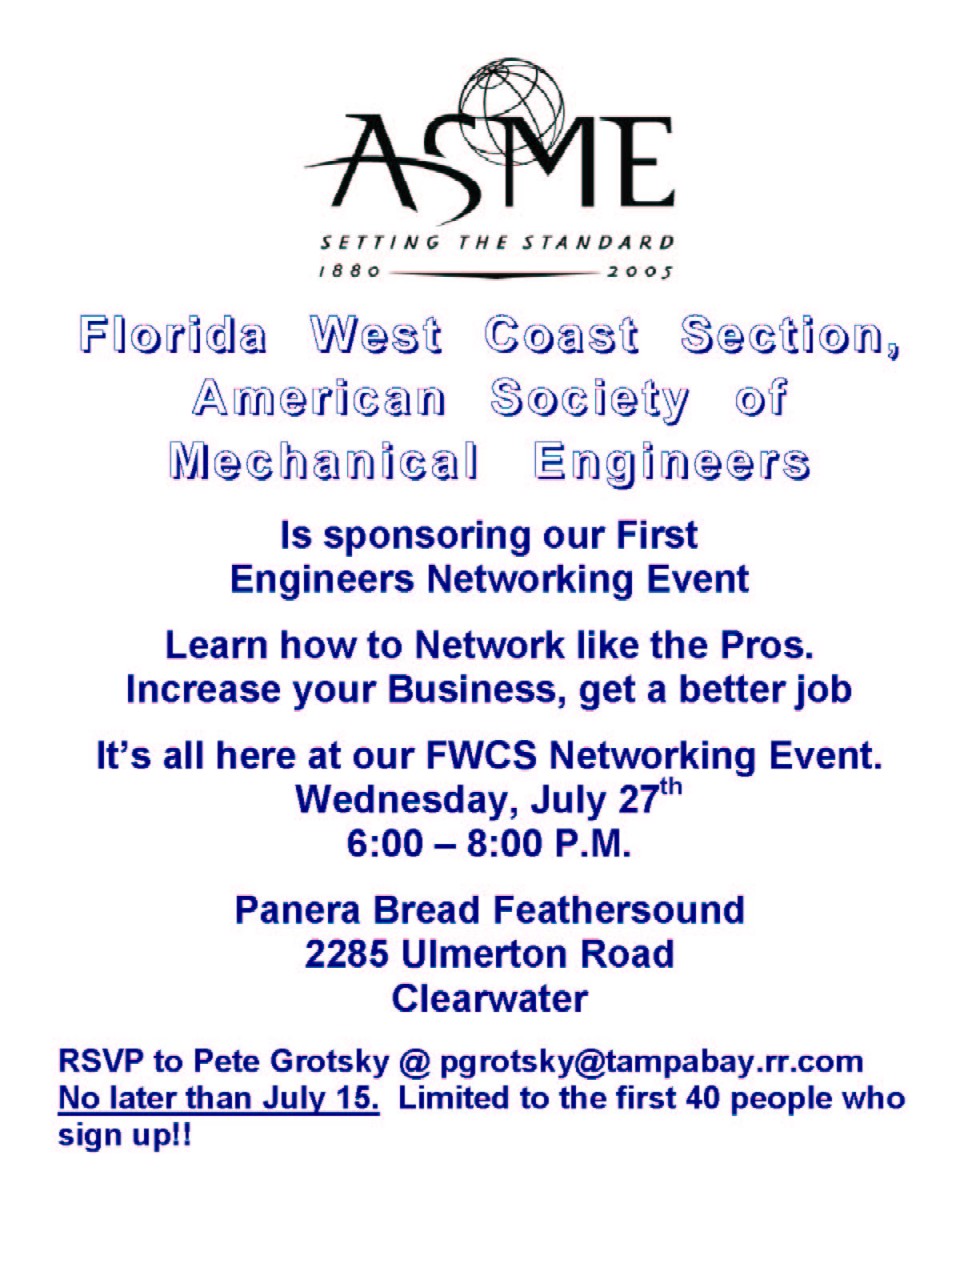 ASME Networking Meeting